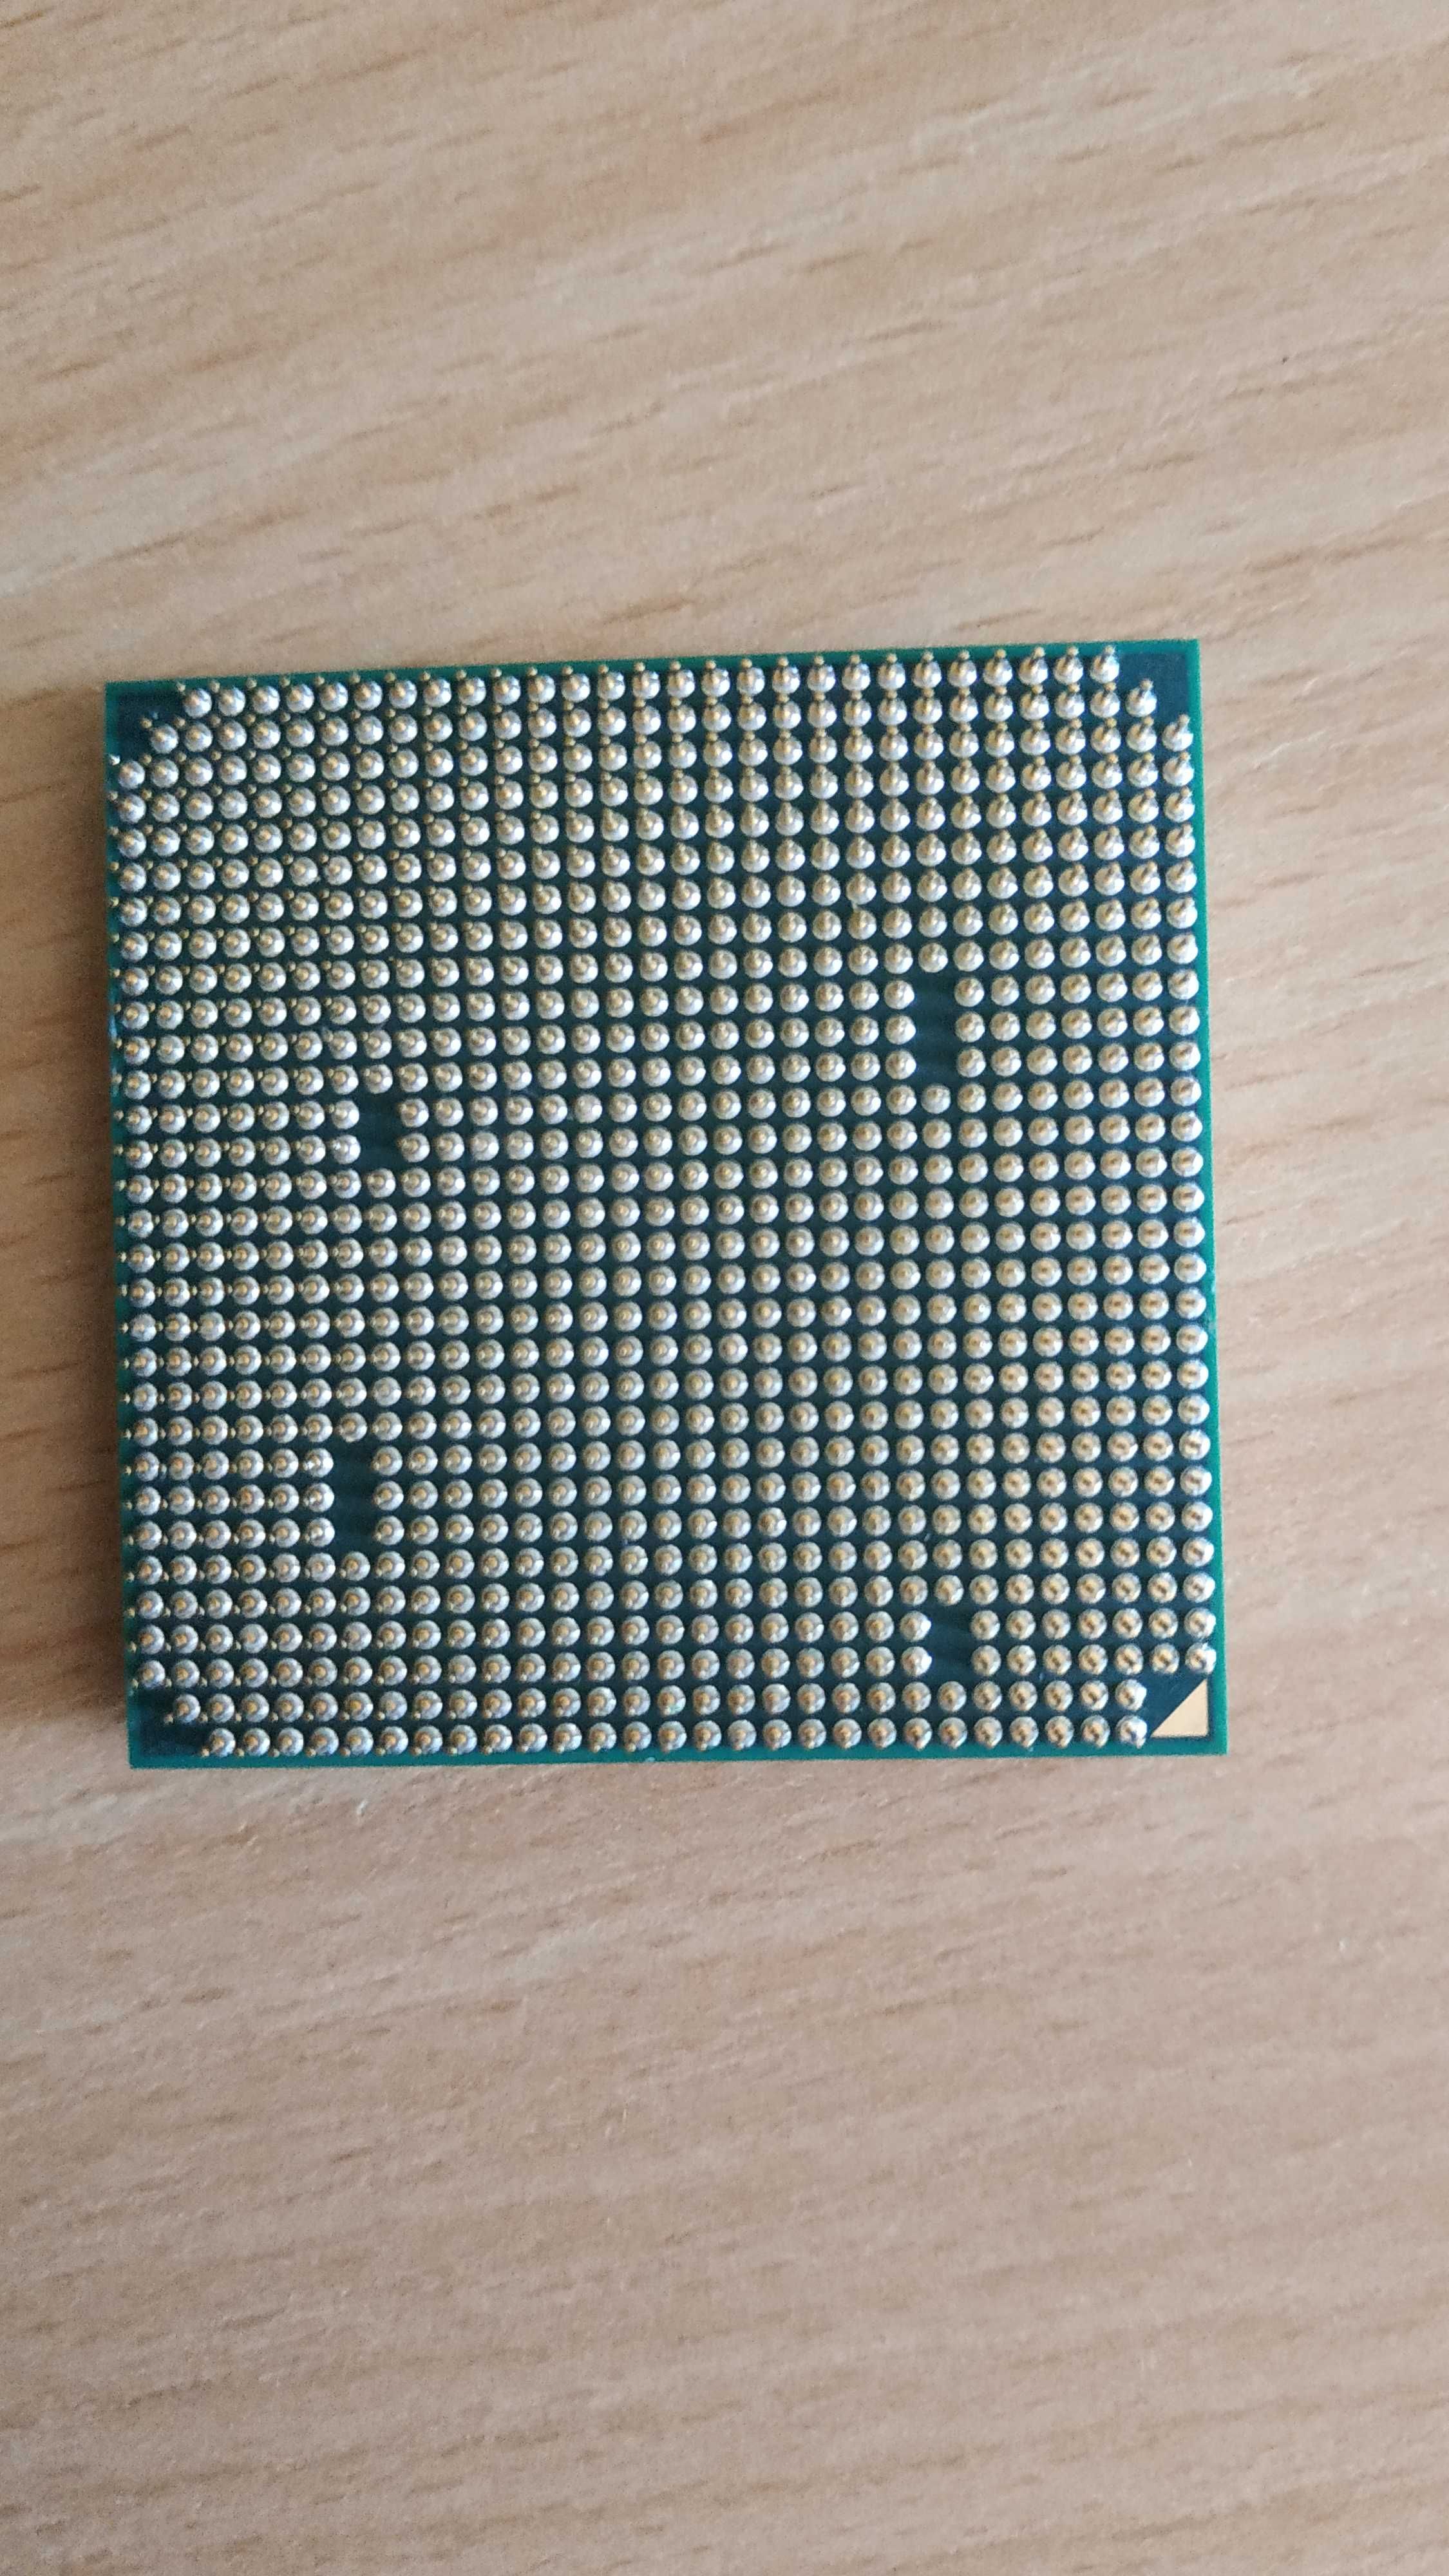 Процессор AMD Athlon II X2 245